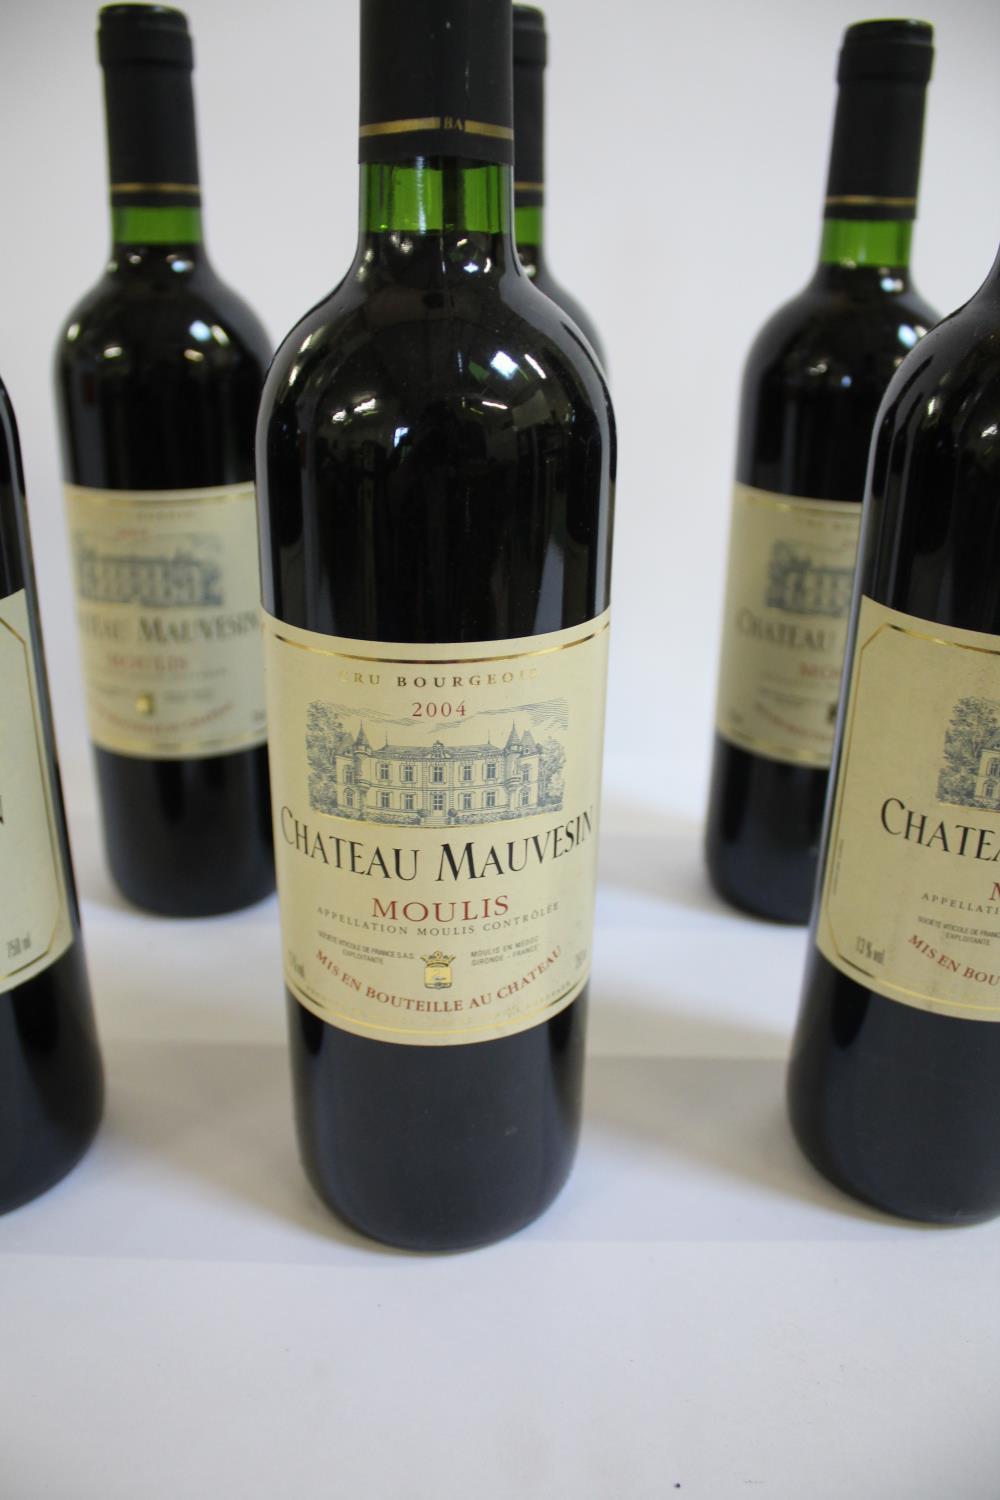 WINE - CHATEAU MAUVESIN MOULIS 6 bottles of Chateau Mauvesin Moulis Cru Bourgeois, 2004. (6) - Image 2 of 2